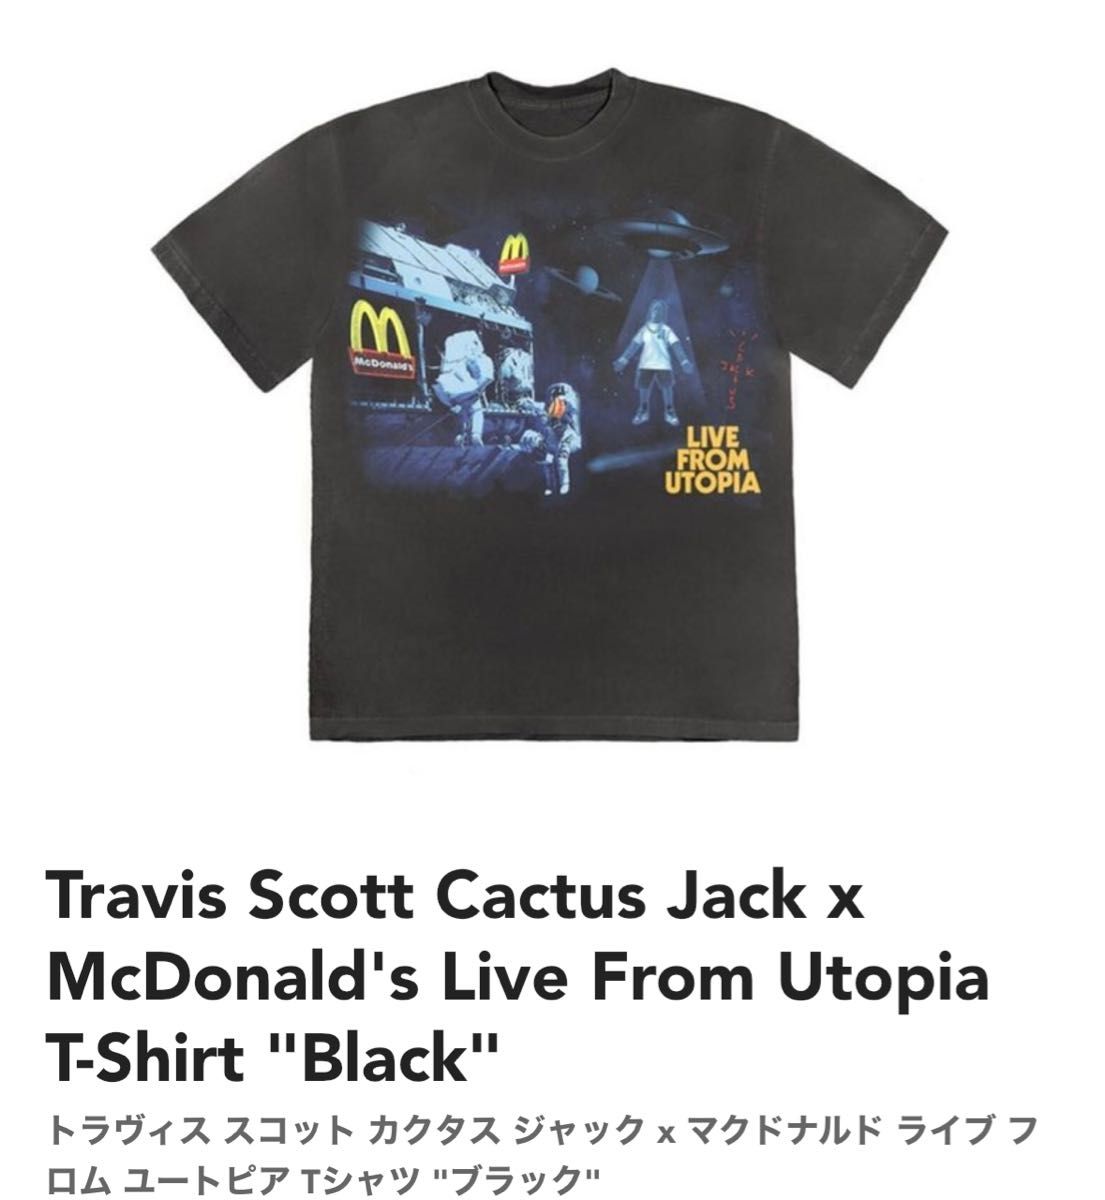 Cactus Jack x McDonald's Utopia Tシャツ.